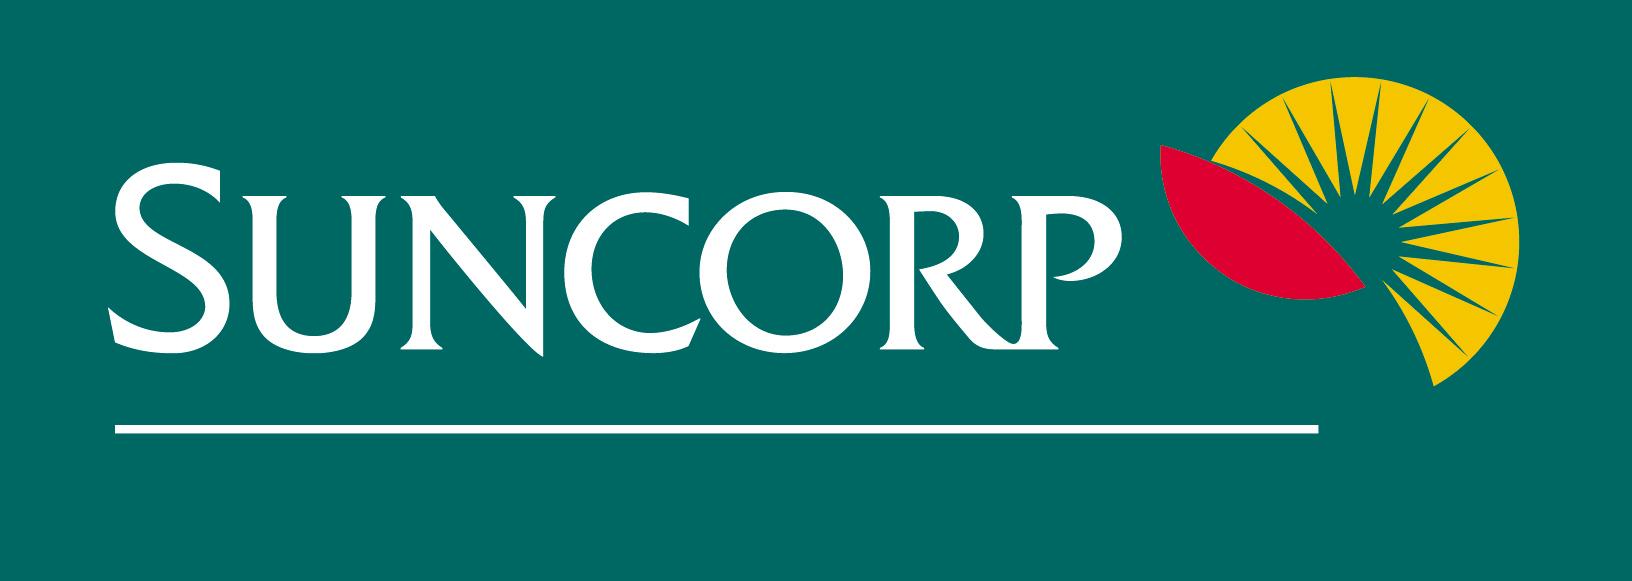 Suncorp Logo - Suncorp